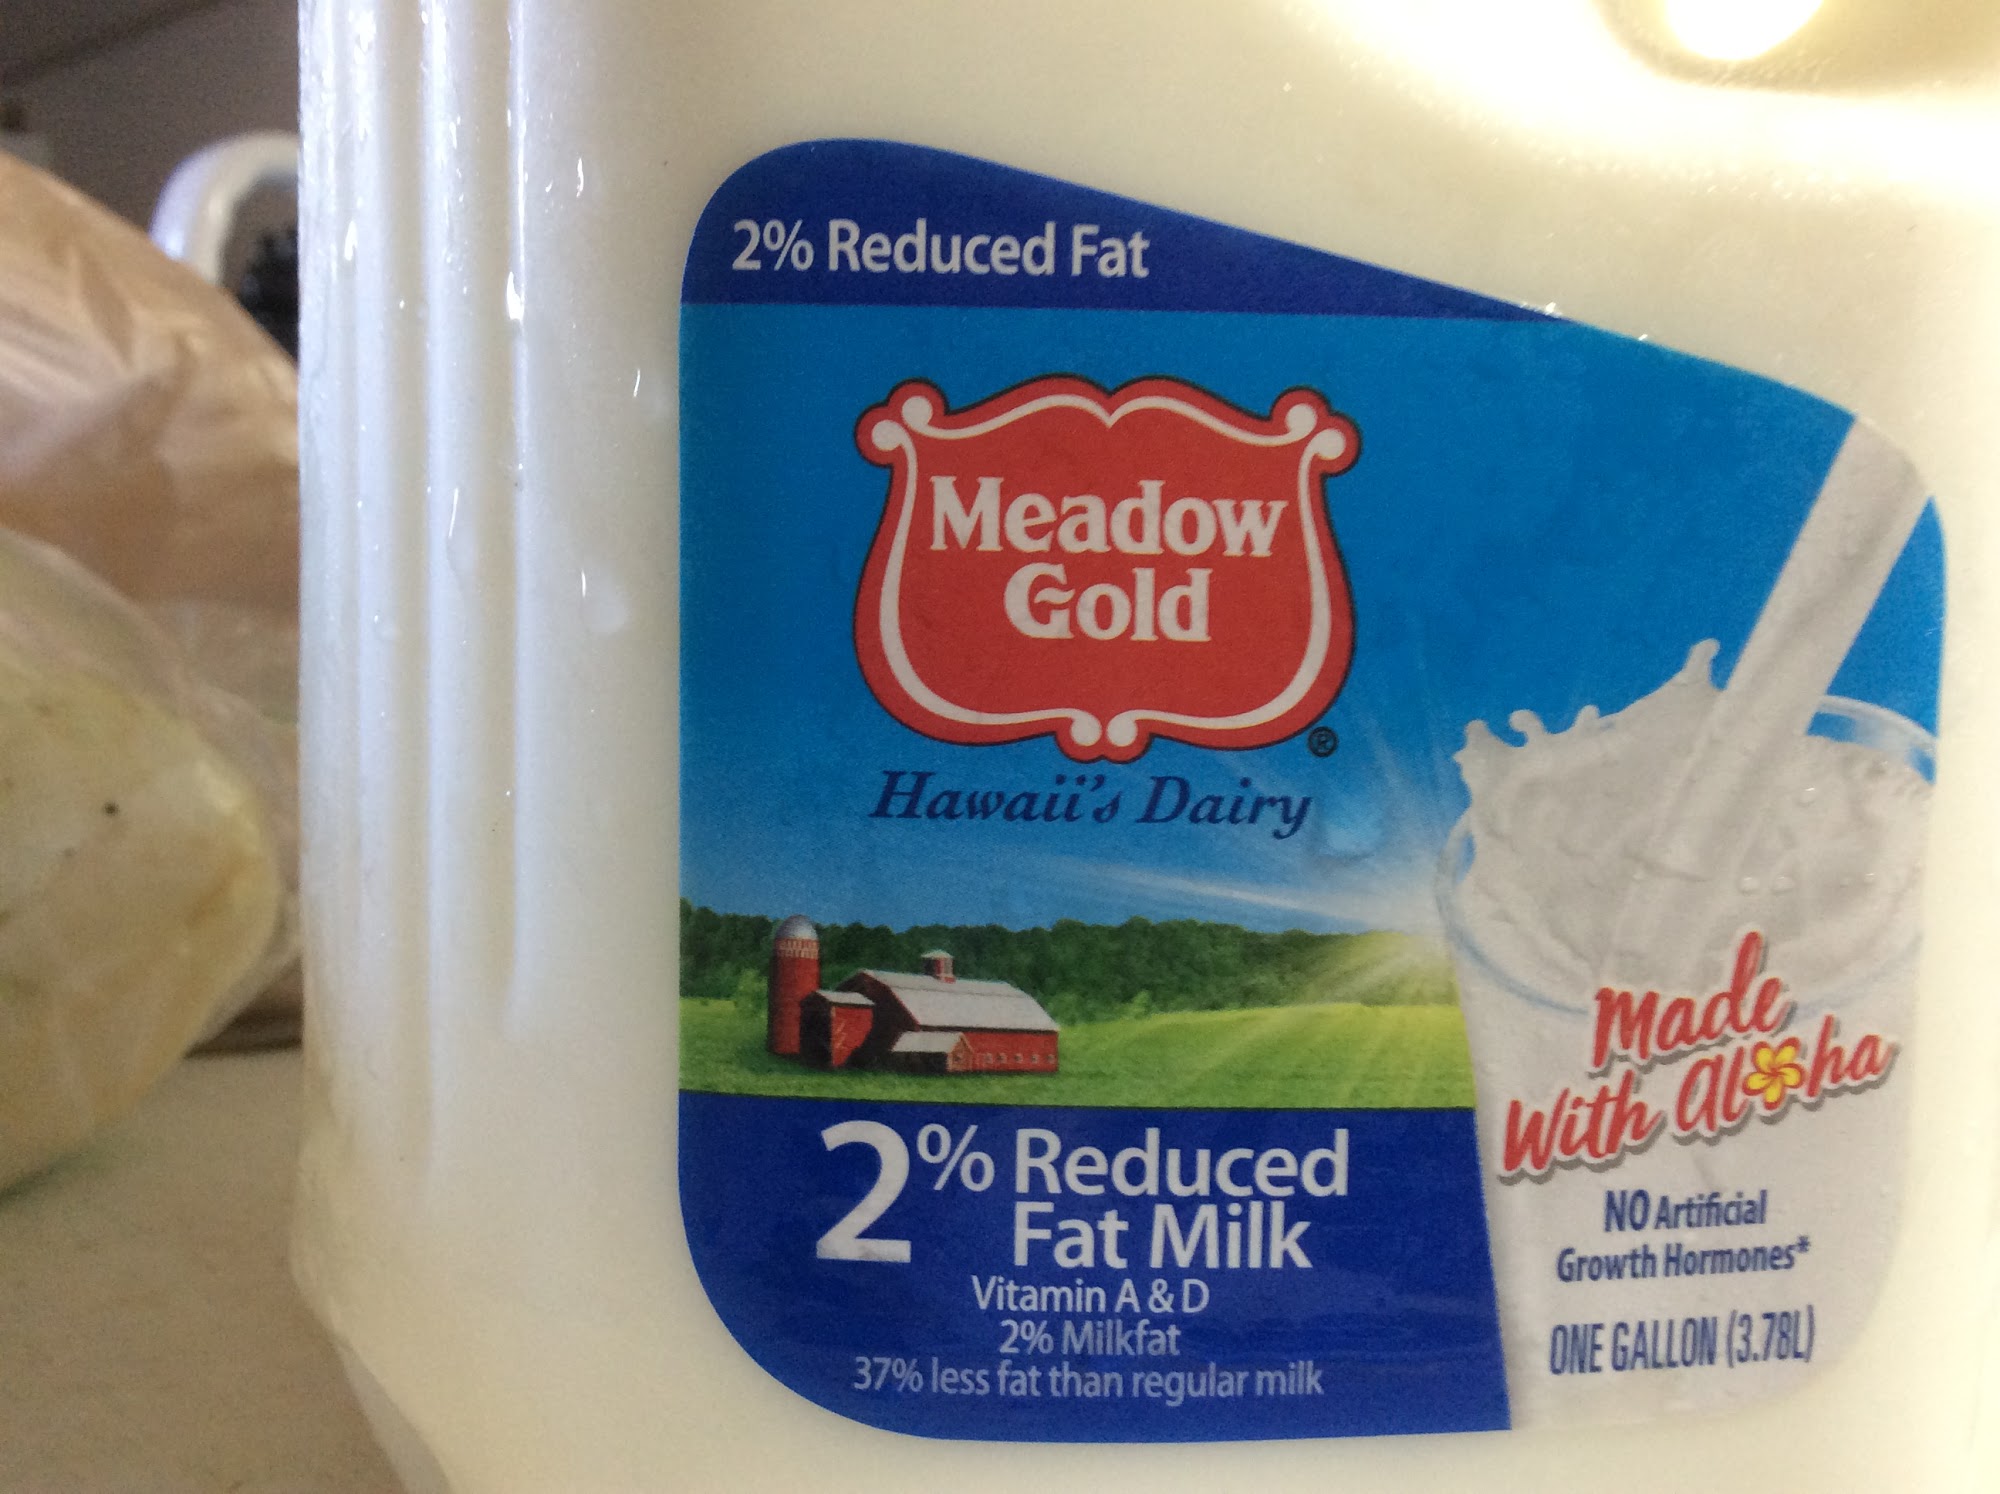 Meadow Gold Dairies Hawaii